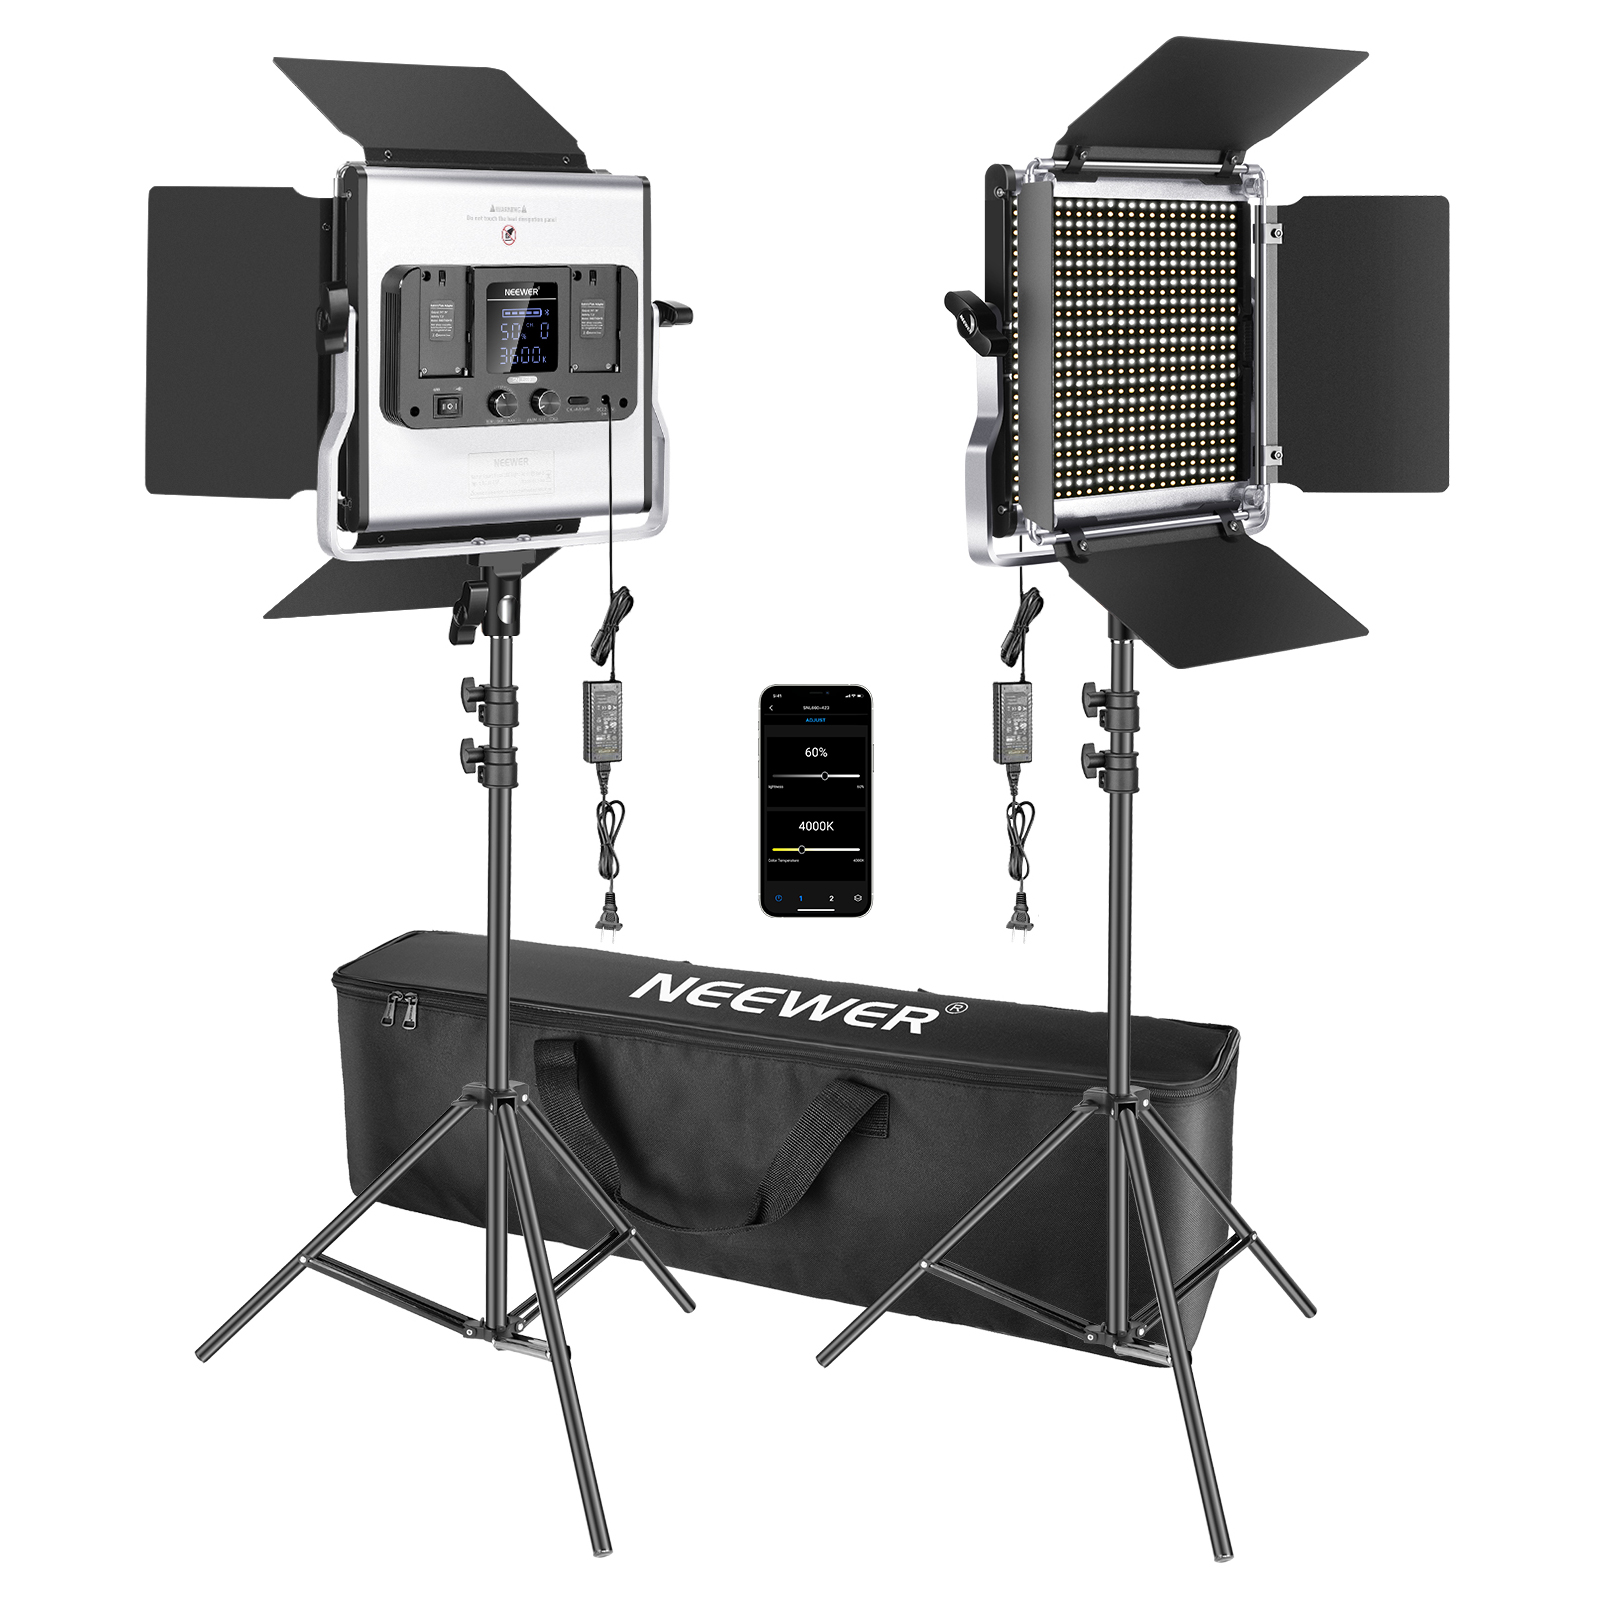 Neewer 2 Packs 660 LED Video Light APP Control Photography Video Lighting  Kit